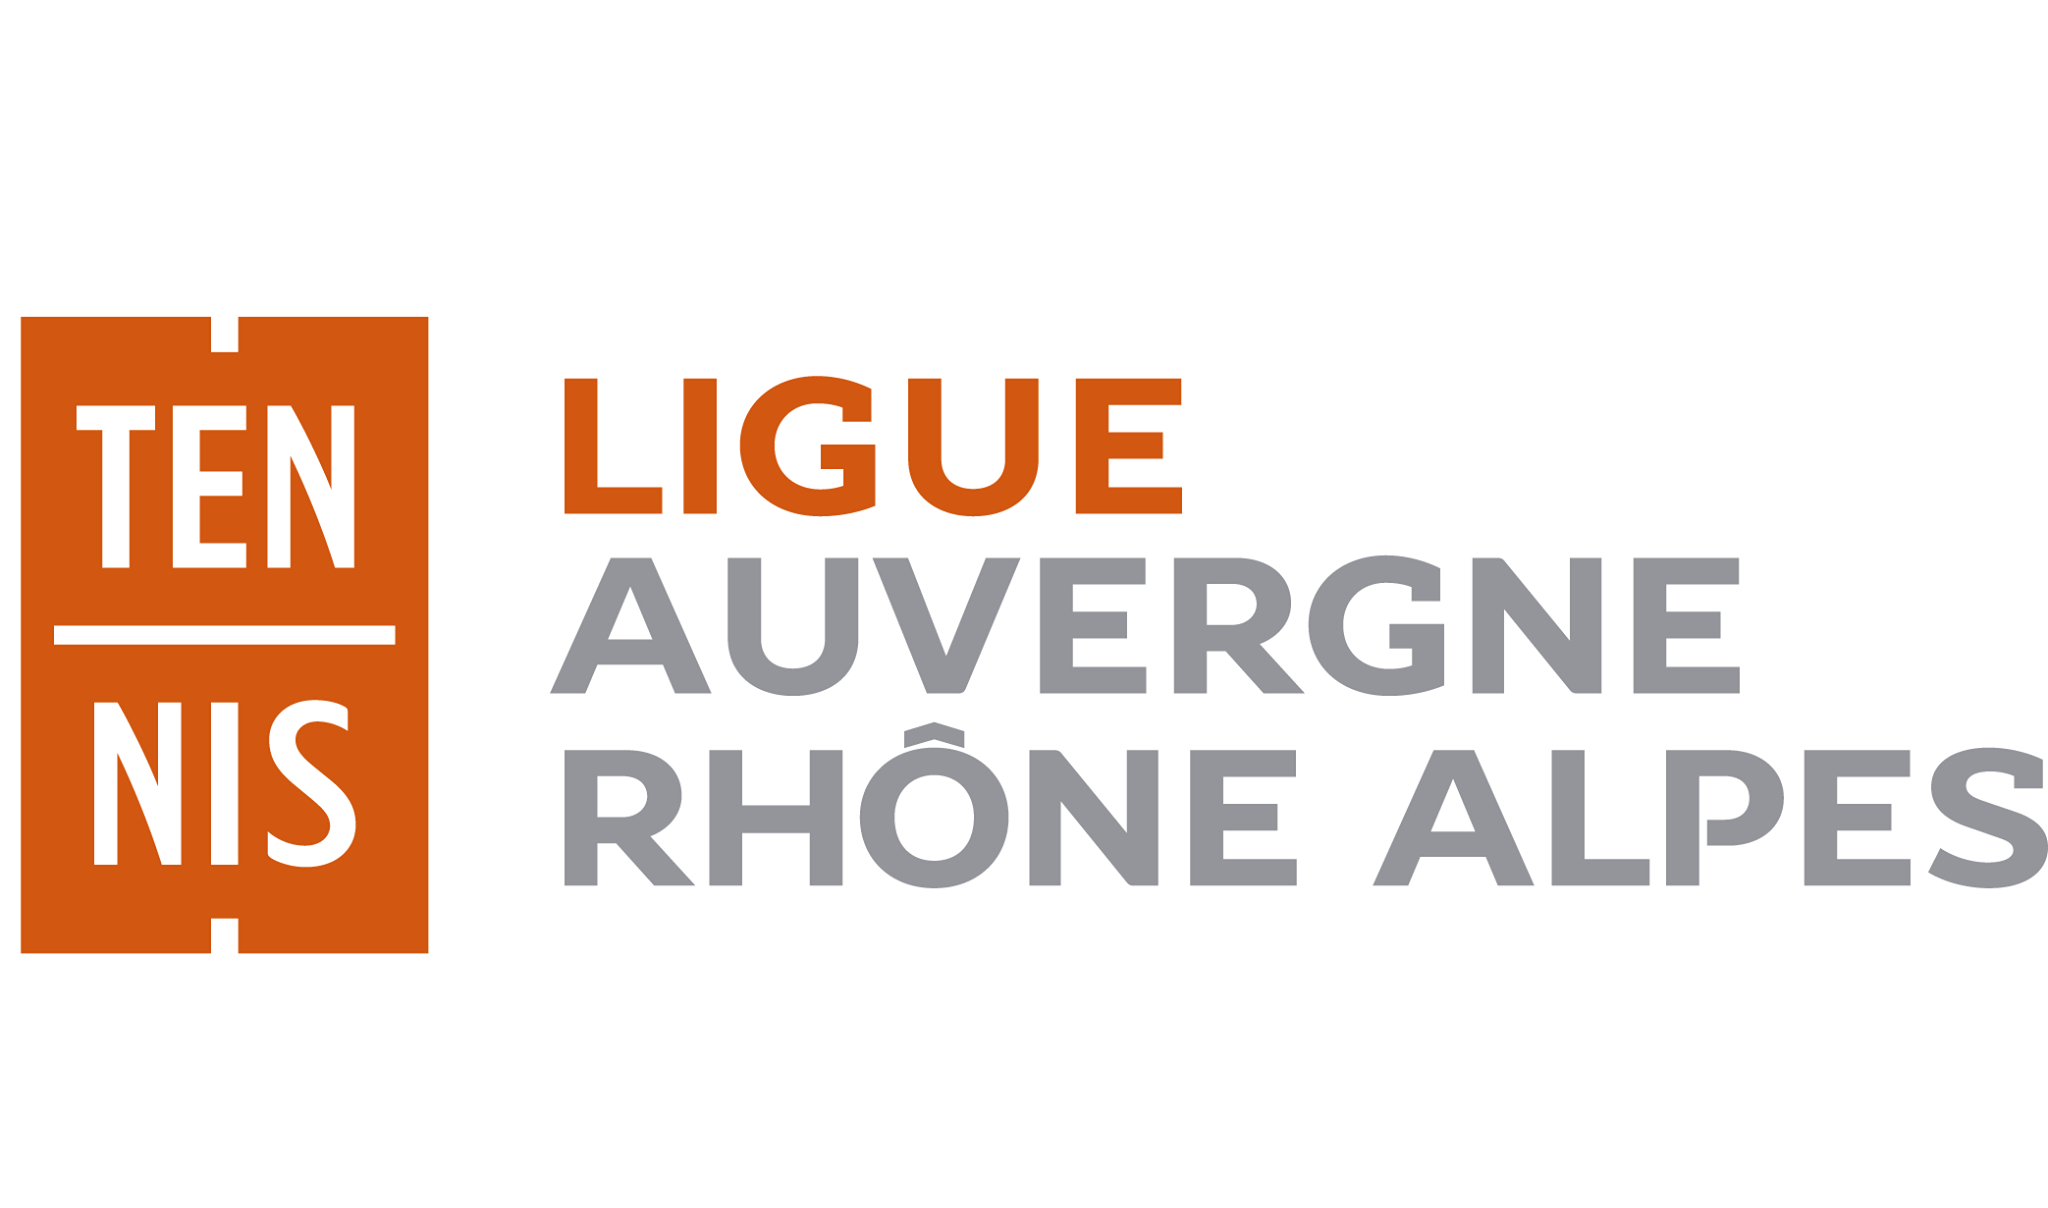 Il campionato Auvergne-Rhône-Alpes sta reclutando!